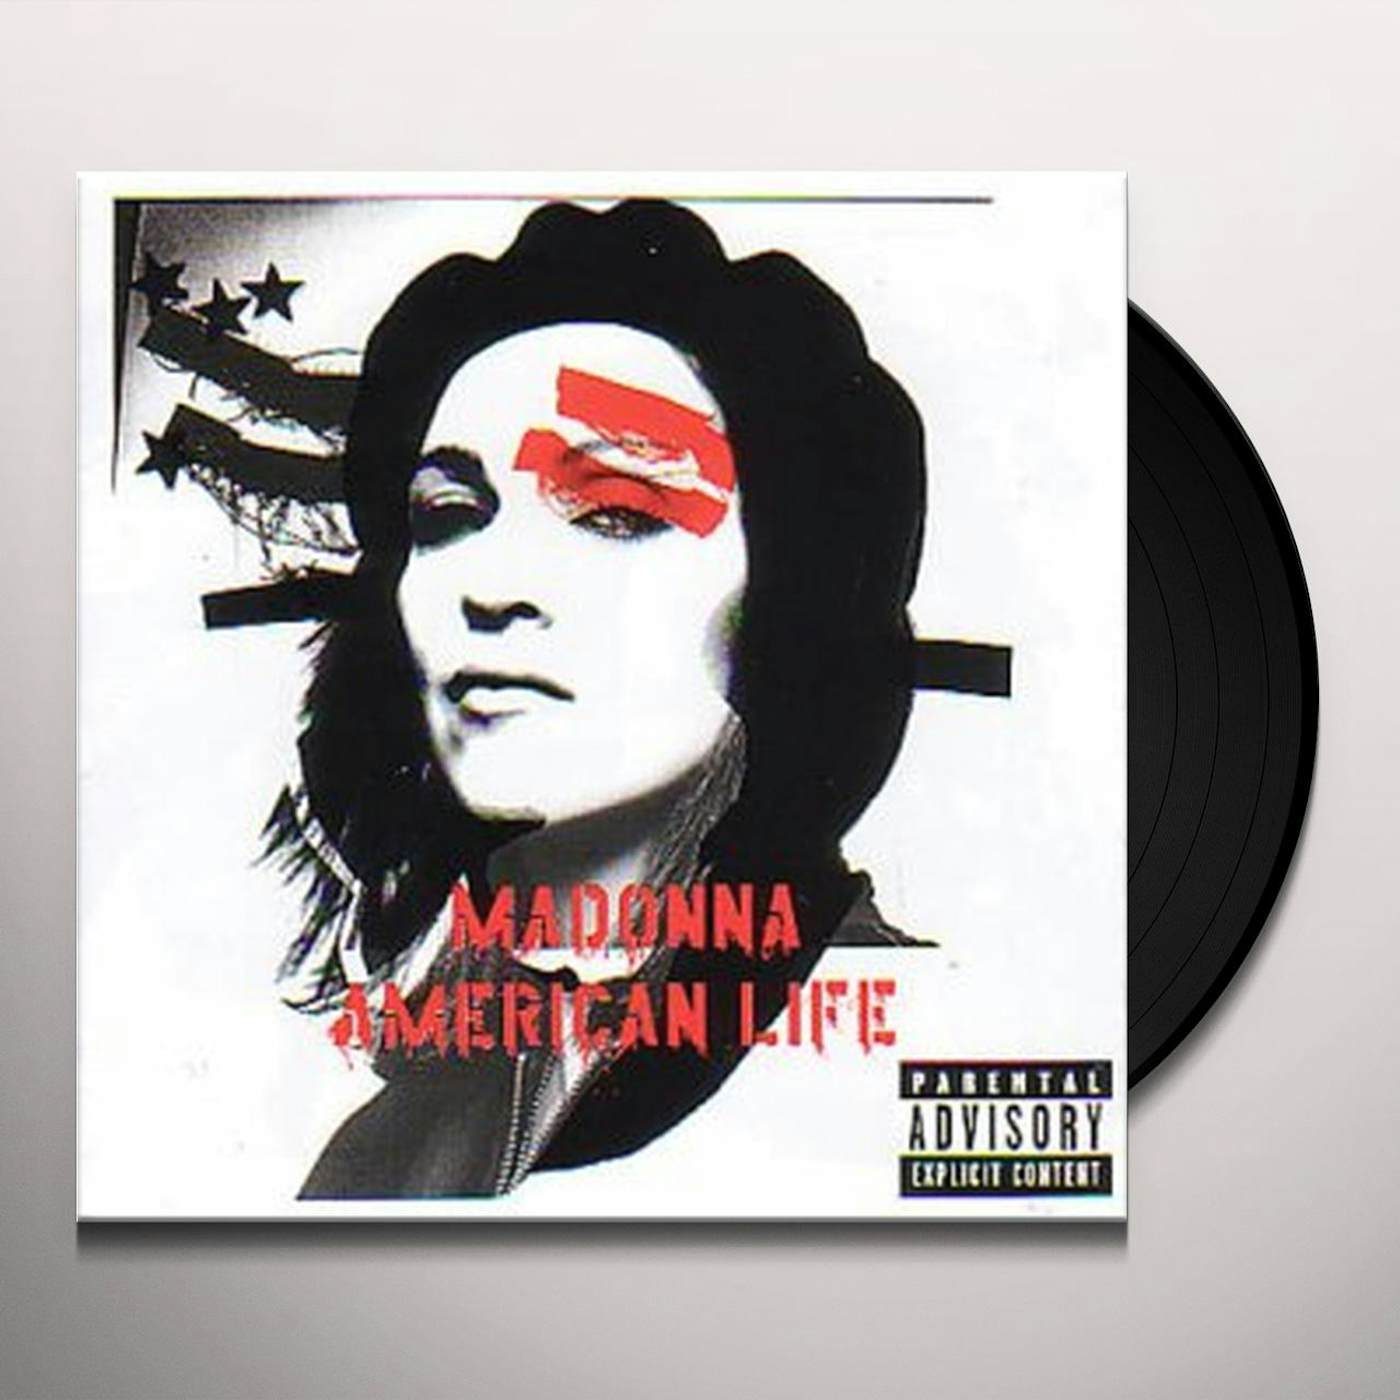 Madonna - Music - Vinyl 